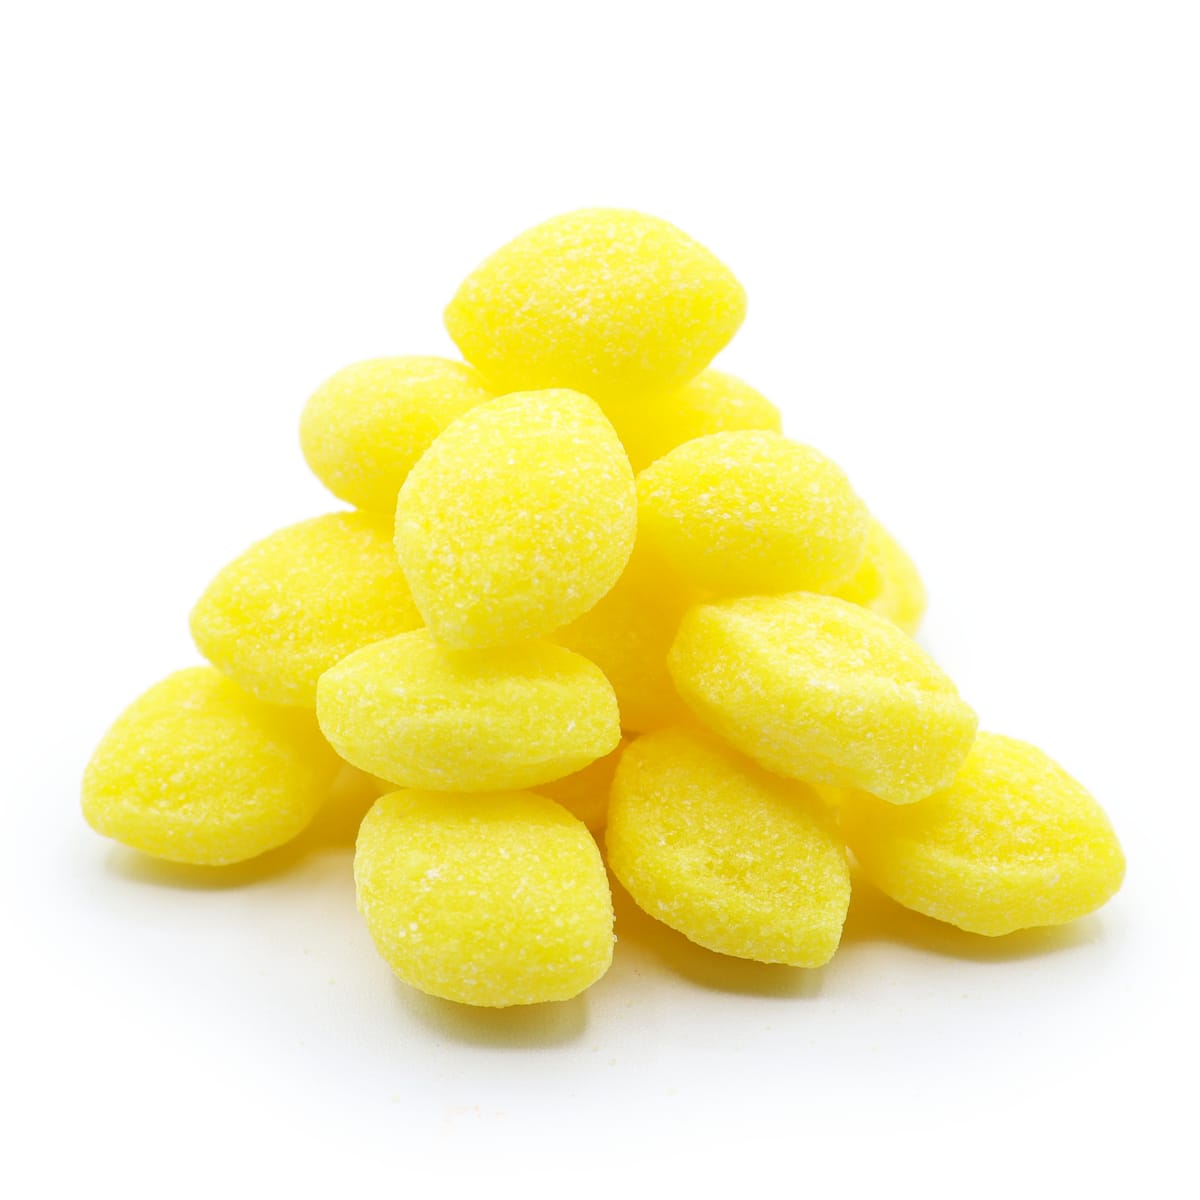 Lemon drop (candy) - Wikipedia